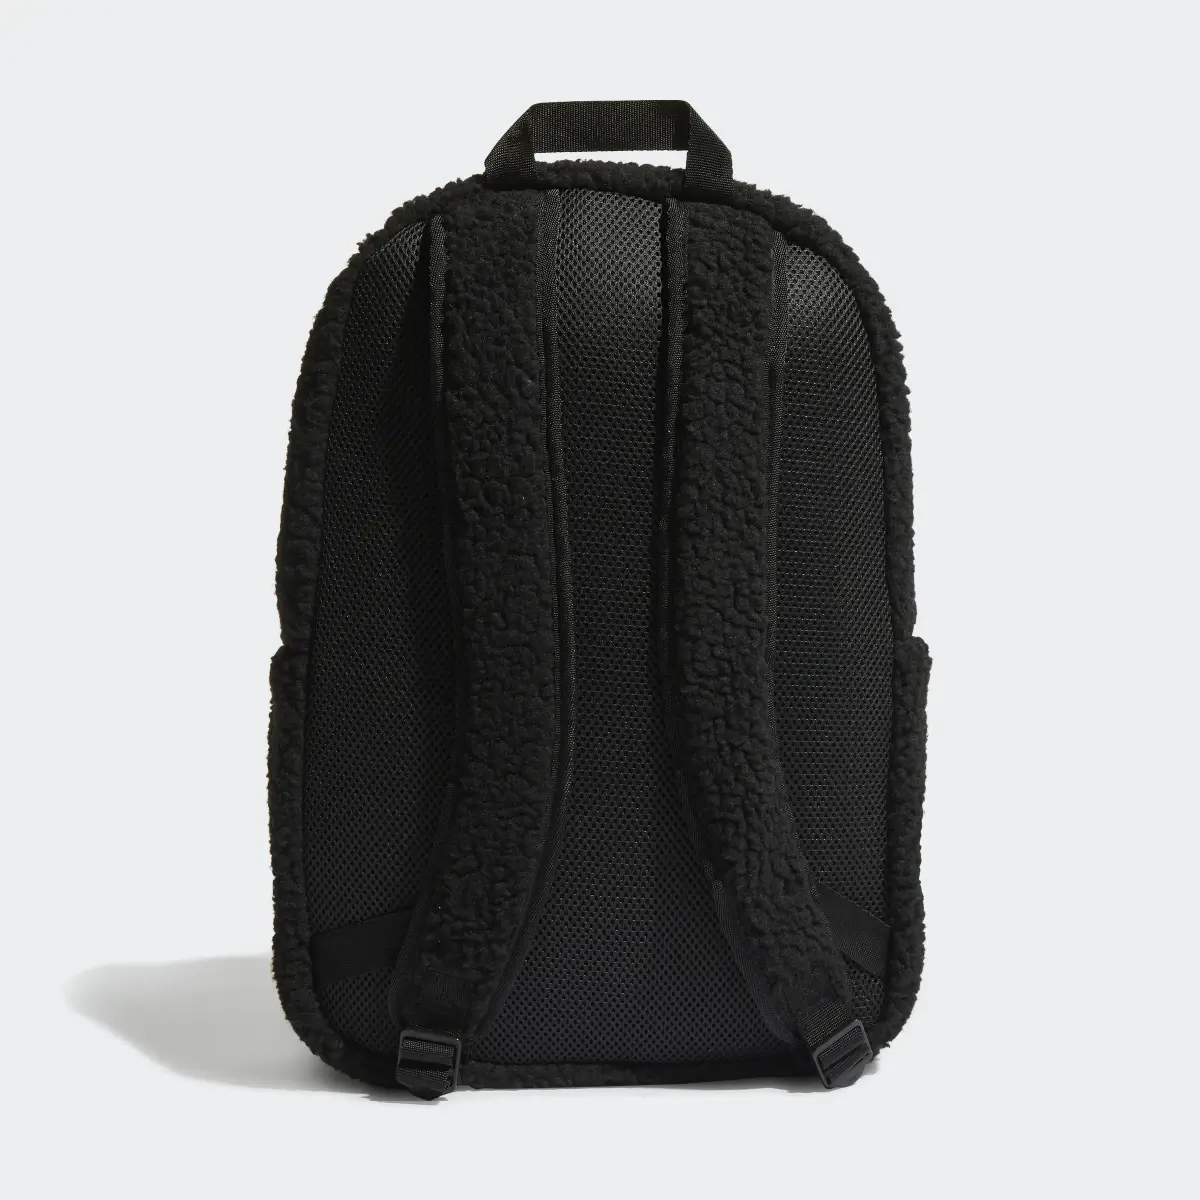 Adidas Backpack. 3